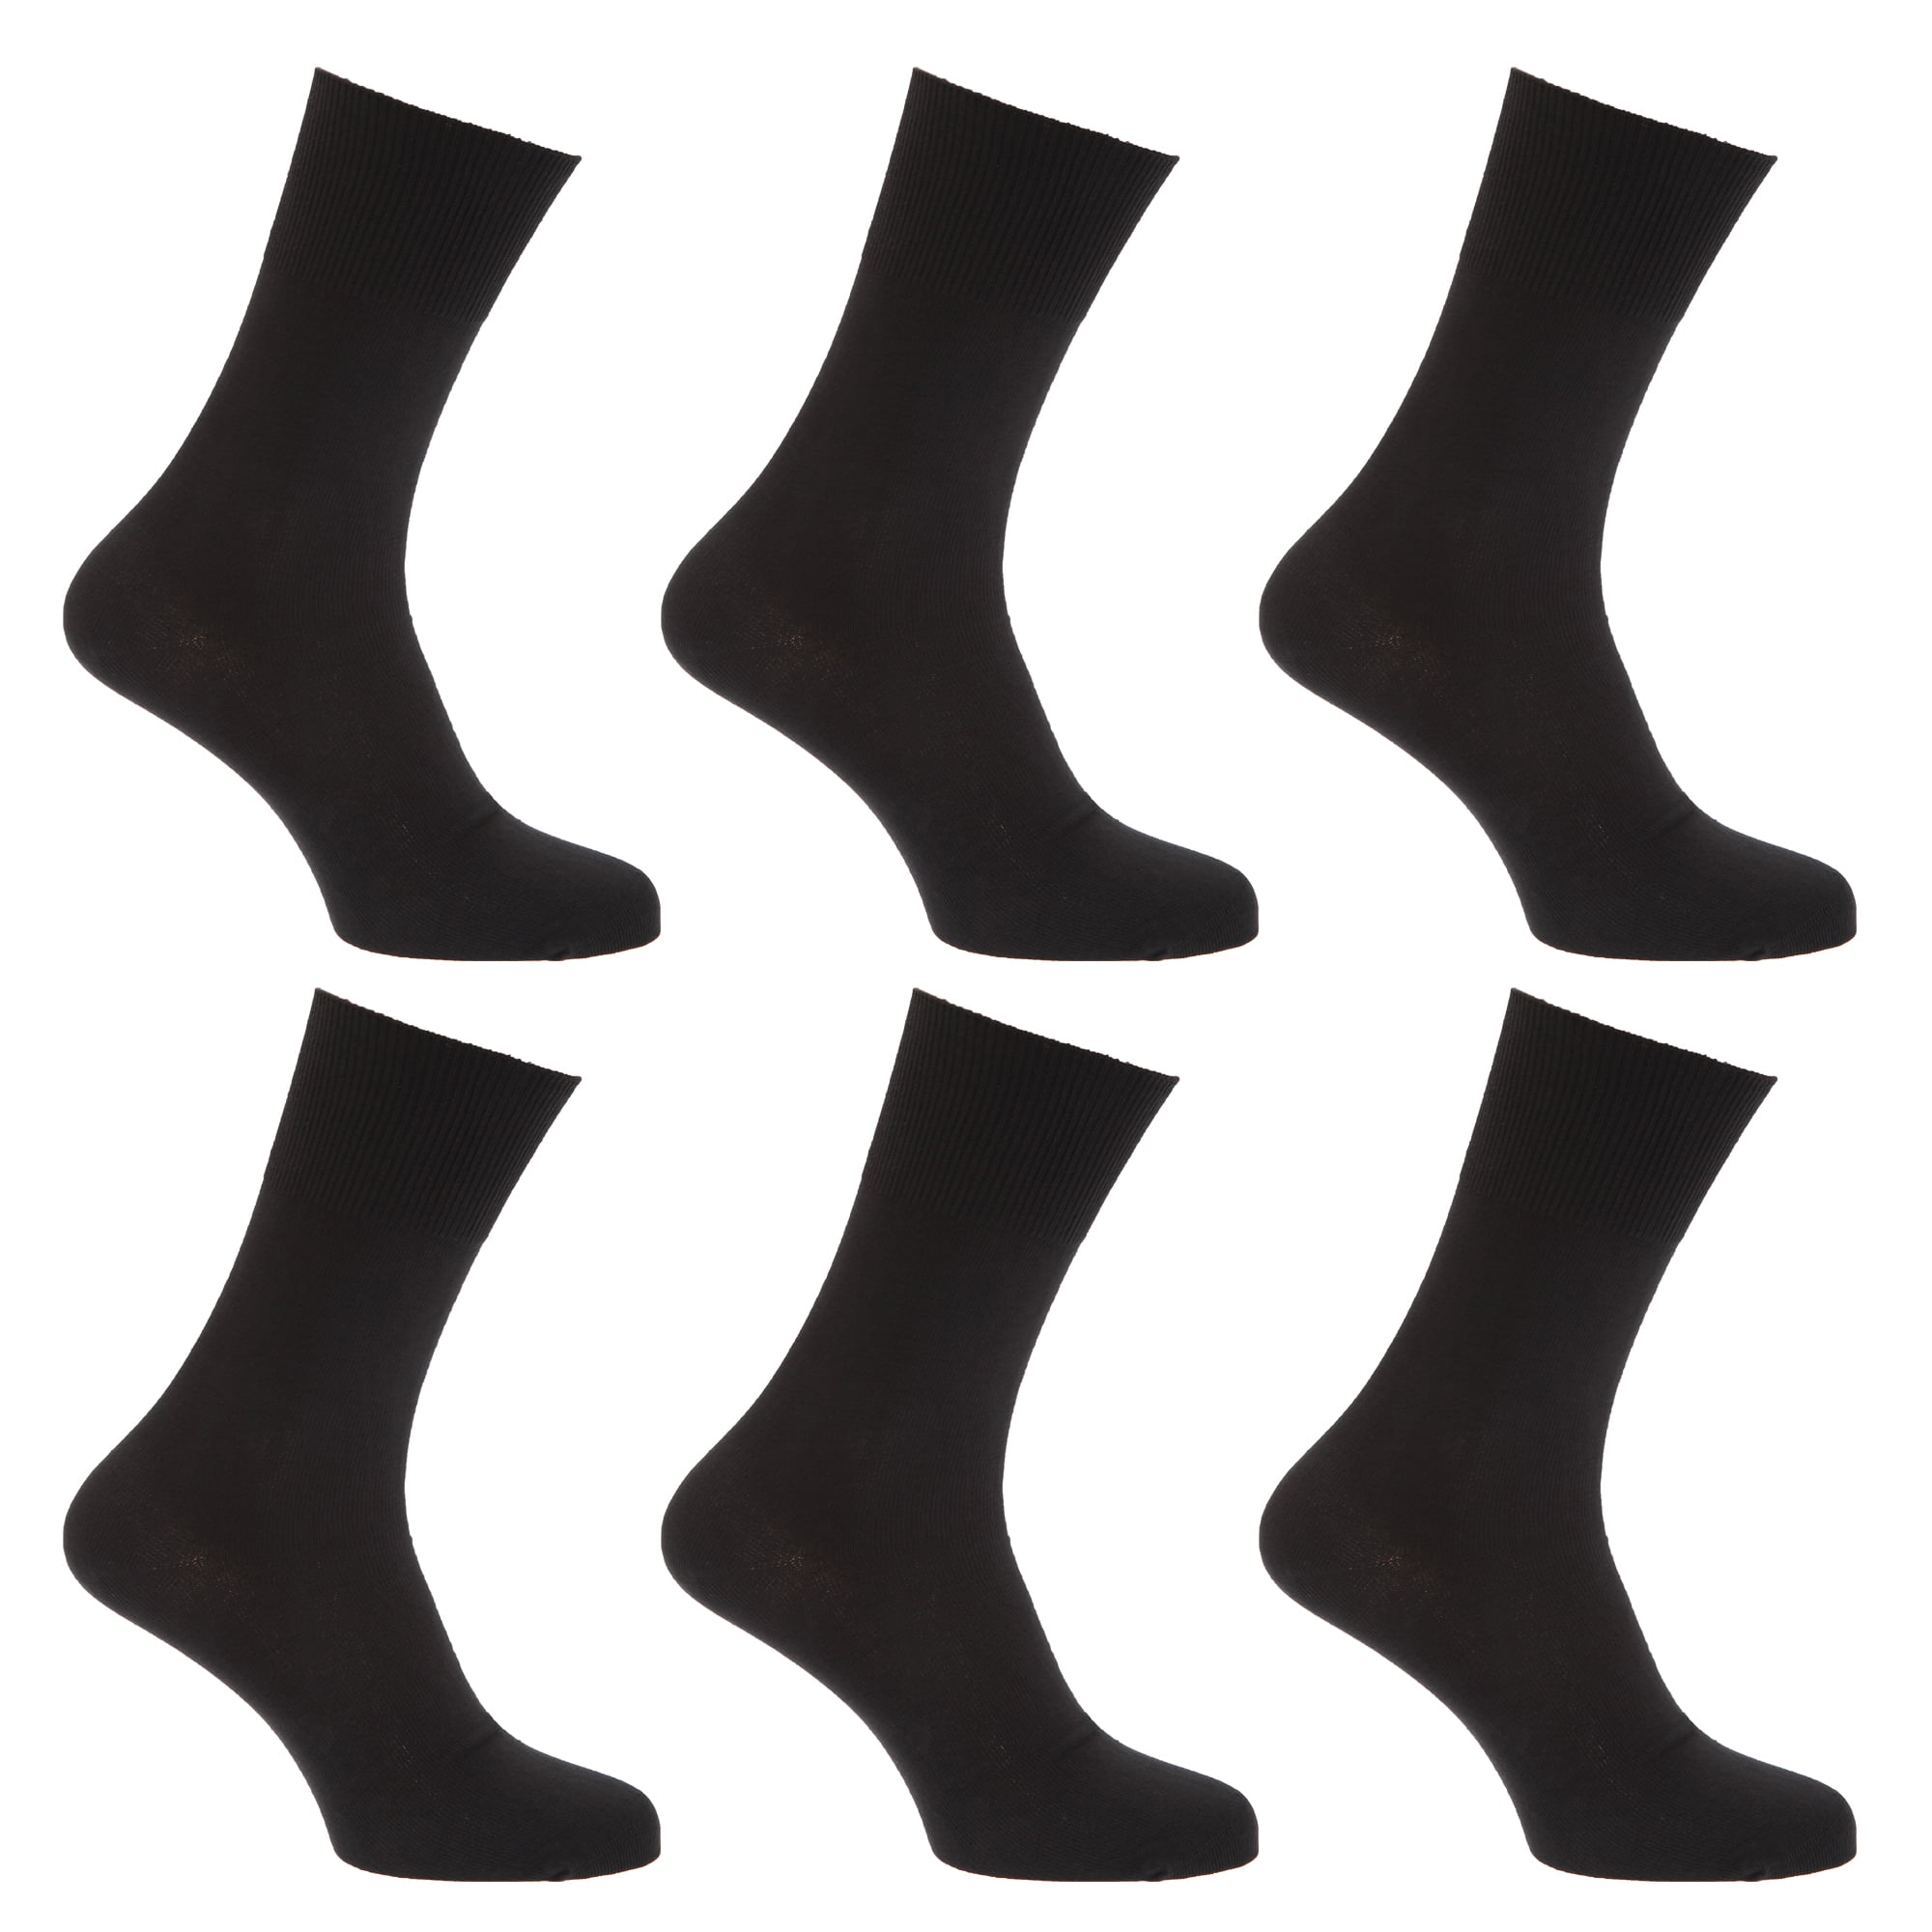 New Men's Non Elastic Bamboo Seam Free Toe Diabetic Gentle Soft Top Grip Sock